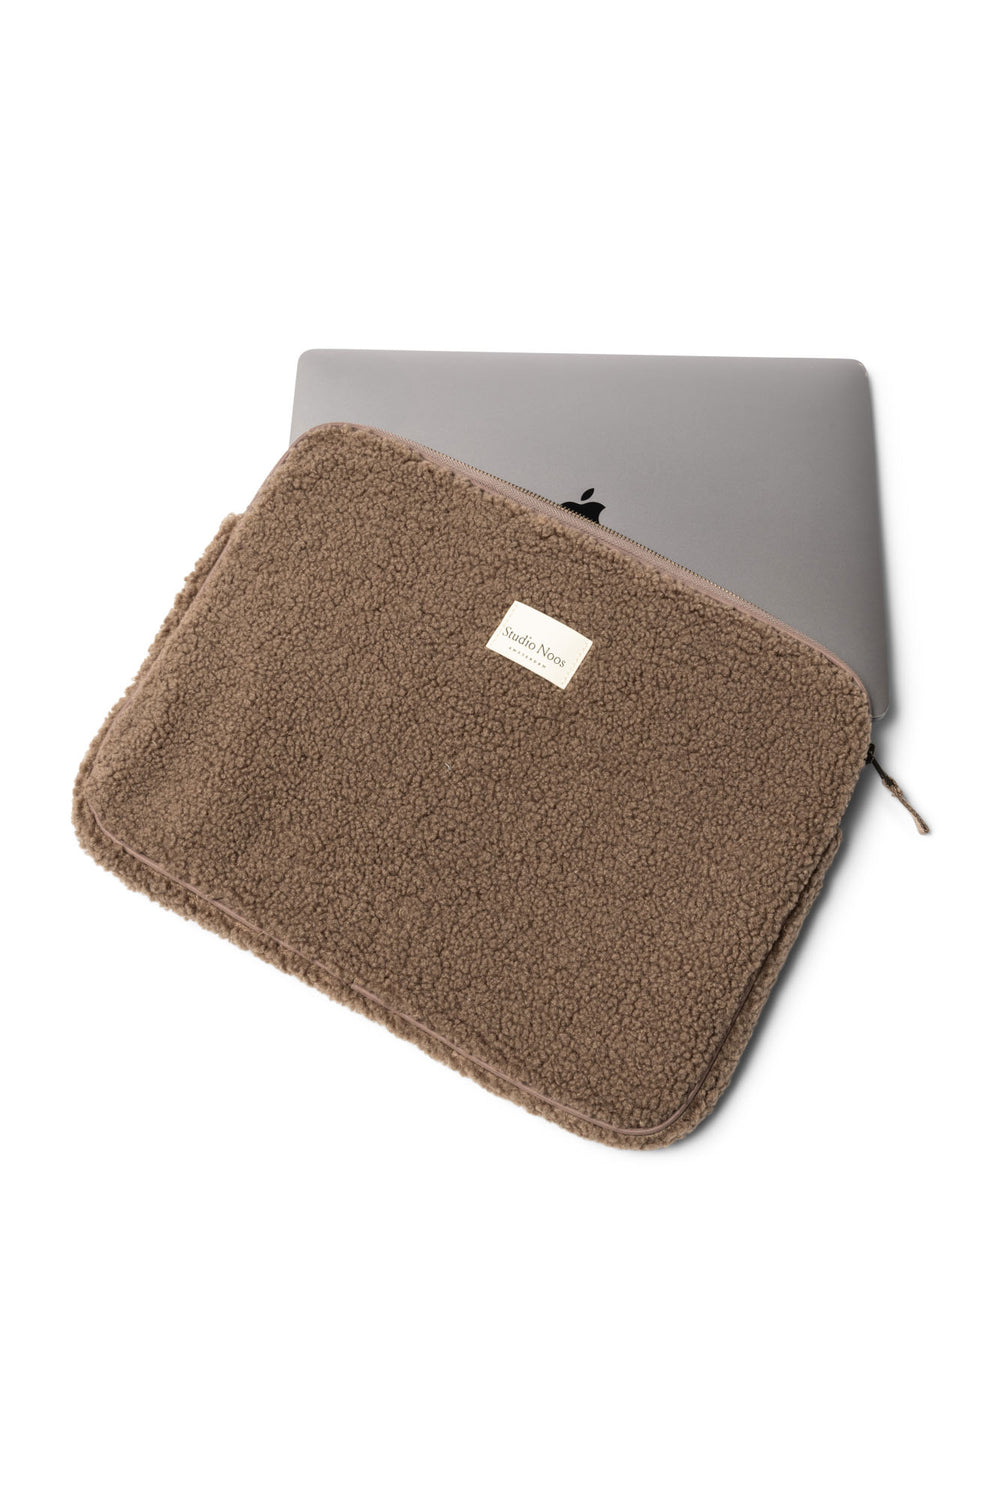 Brown Teddy Laptop Sleeve | 15 INCH